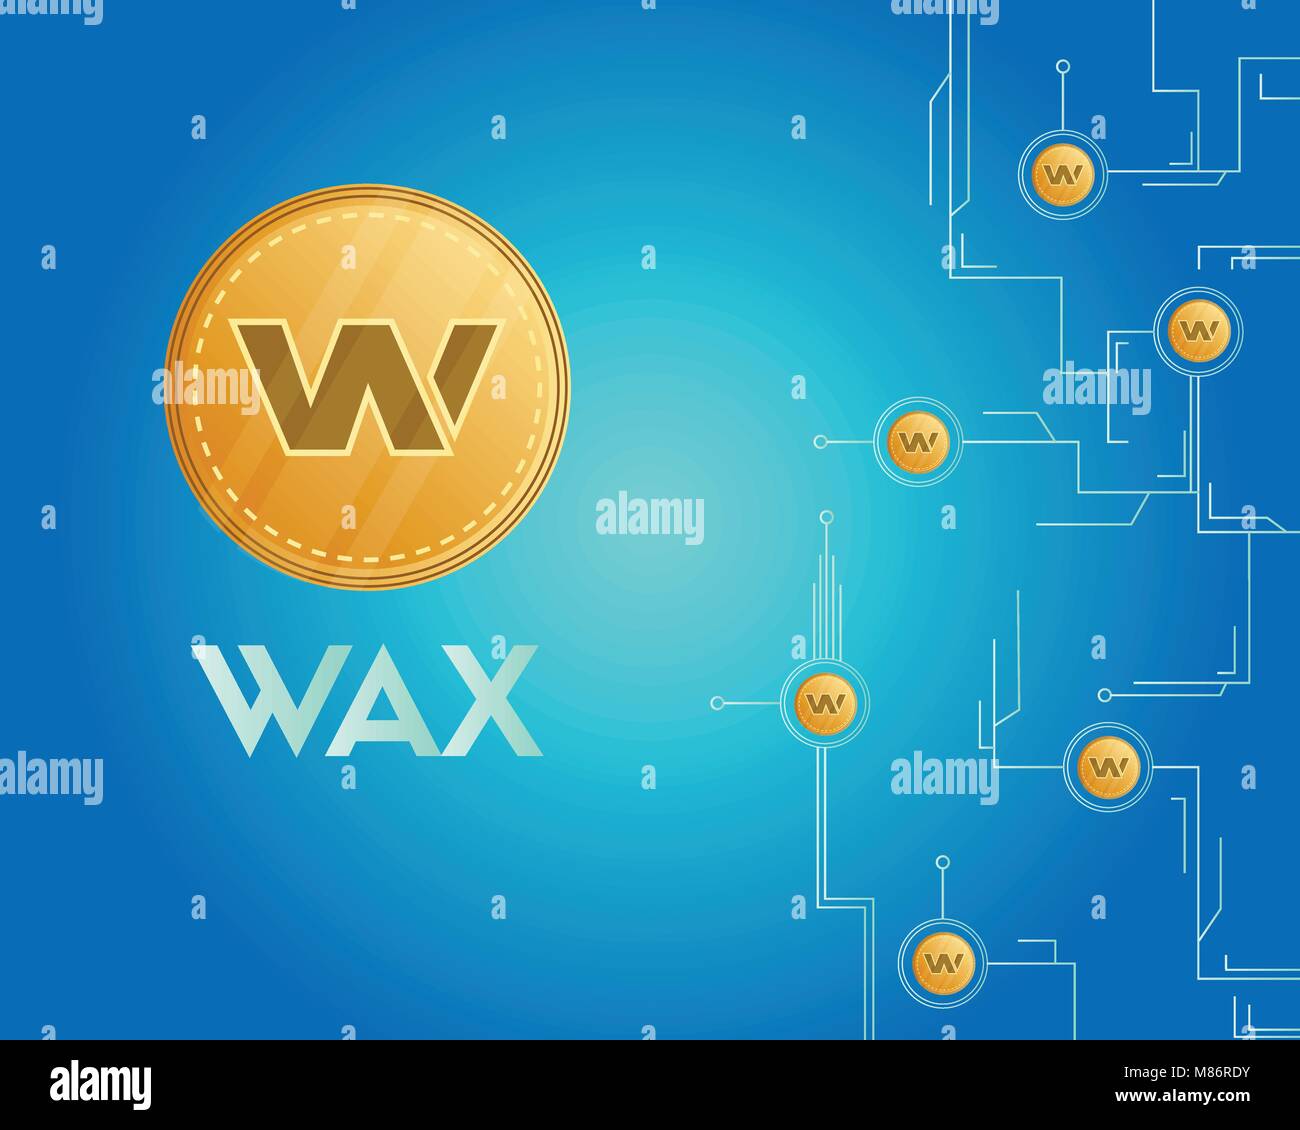 wax cryptocurrency ico